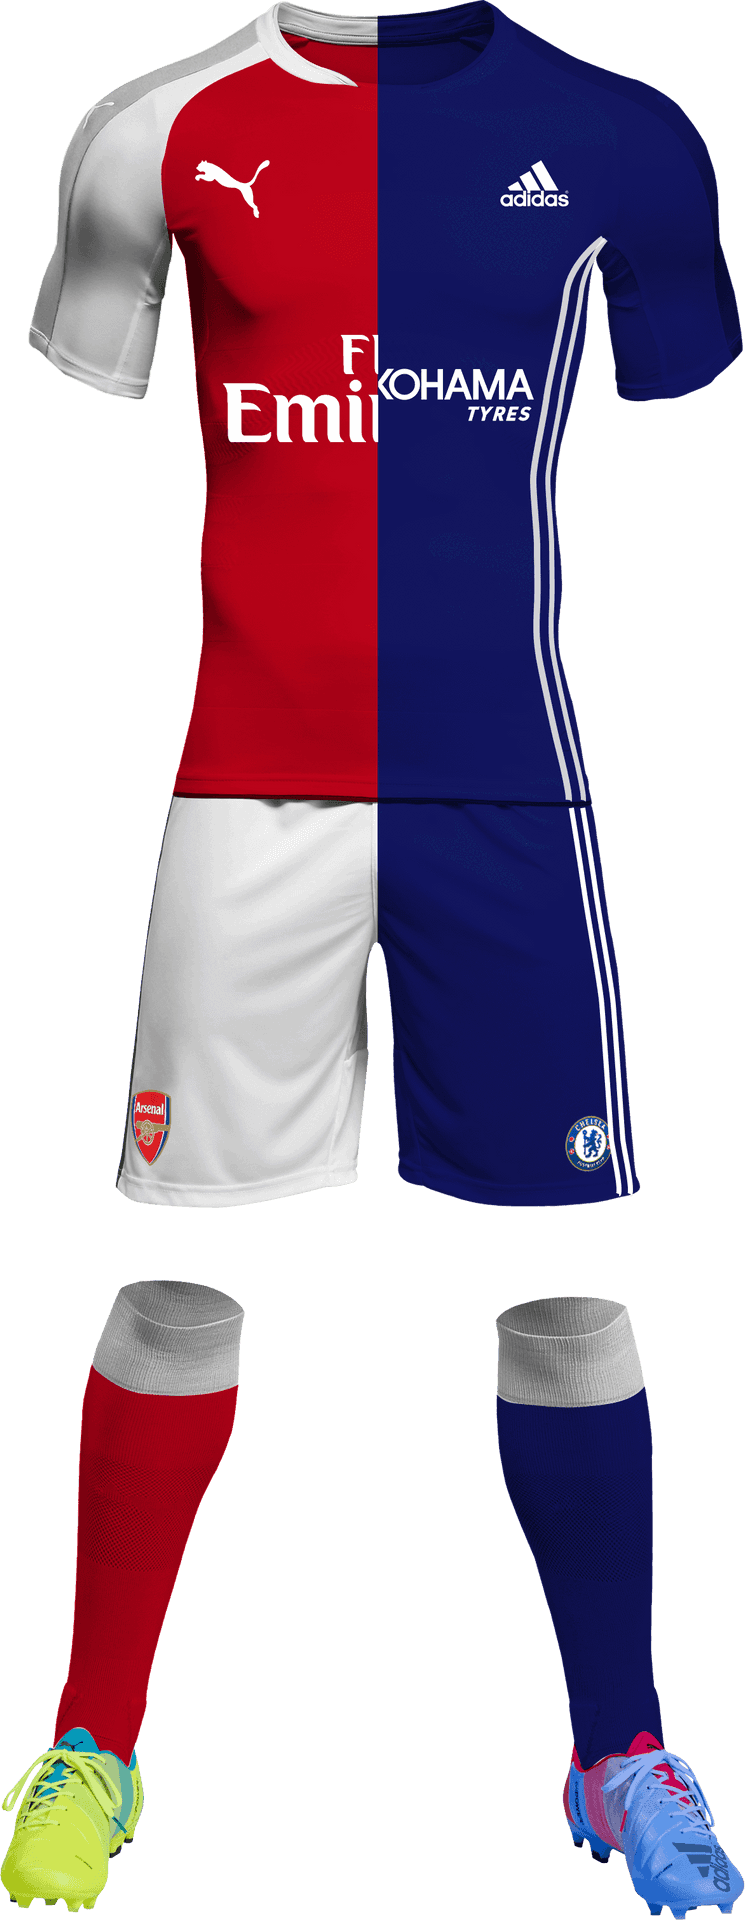 Fly Emirates Arsenal Chelsea Football Kit Hybrid PNG image